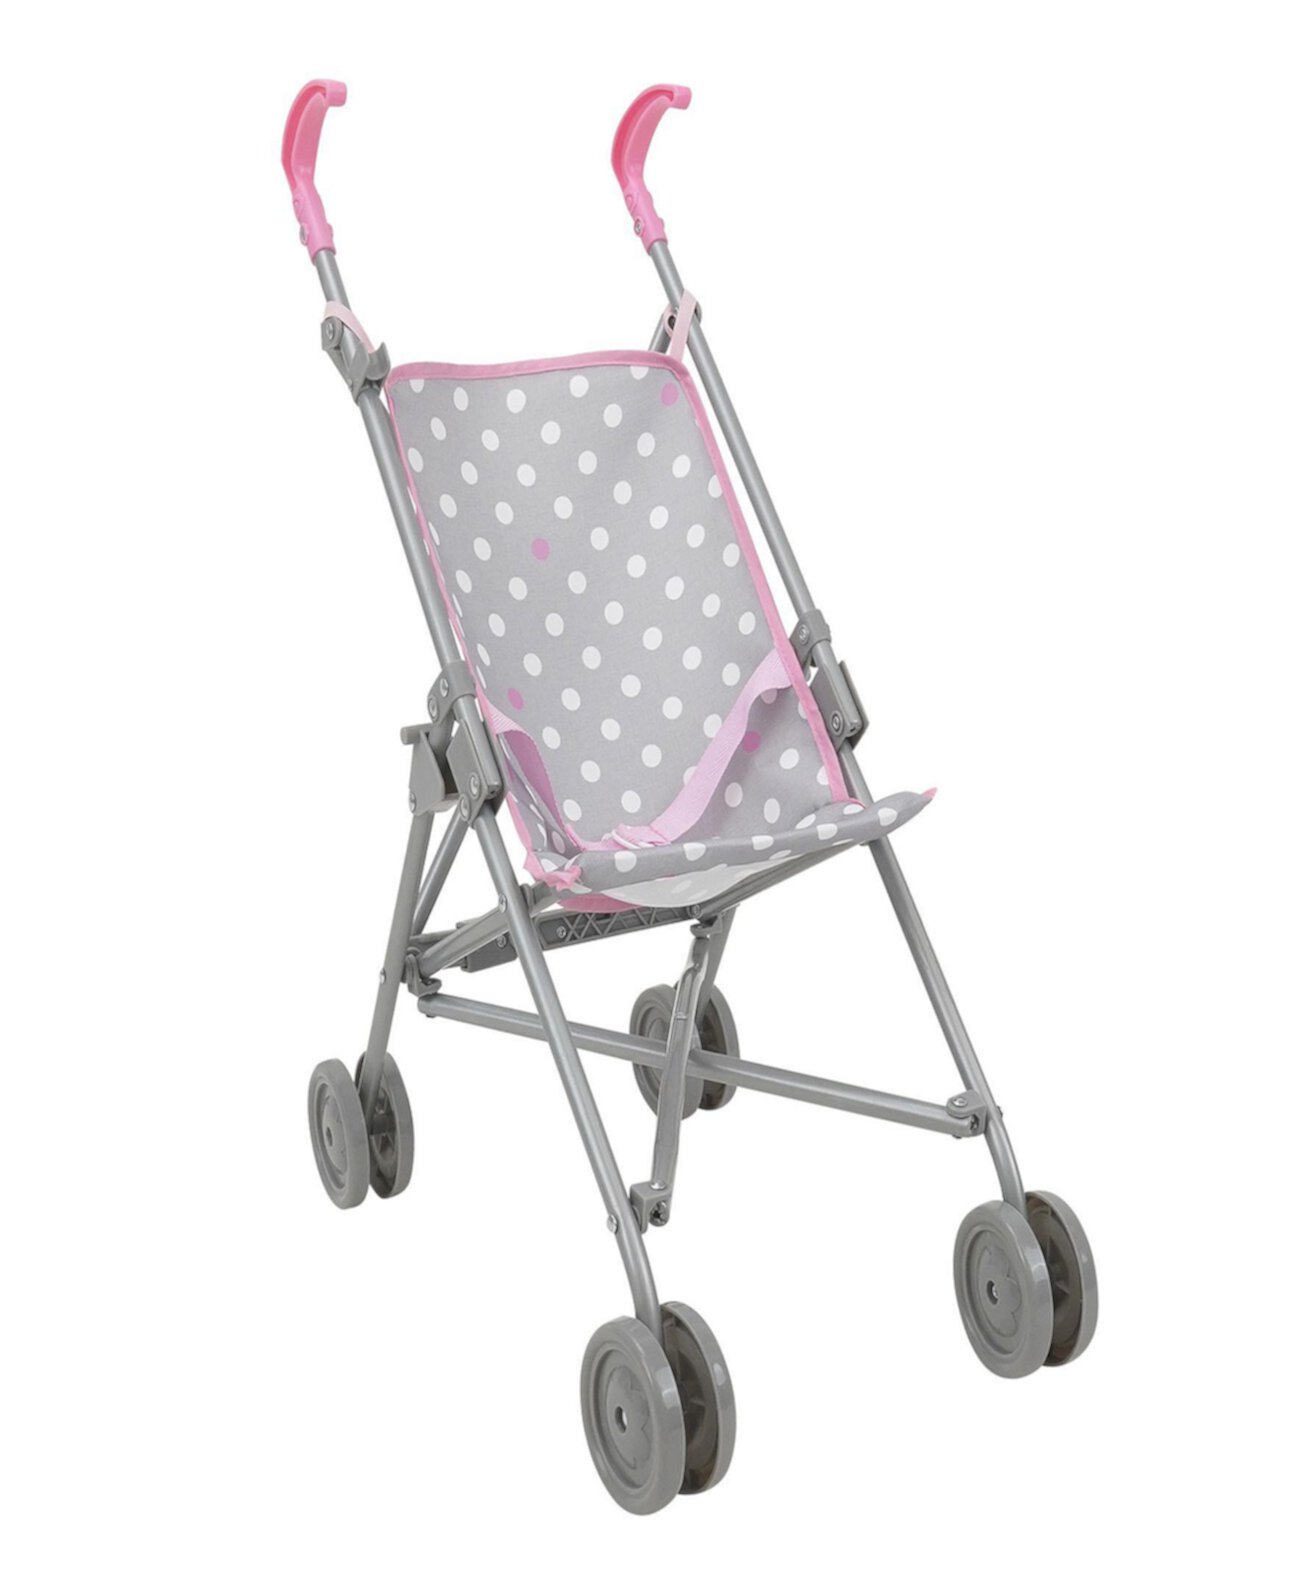 Crew - Cotton Candy Pink - Umbrella Doll Stroller 509